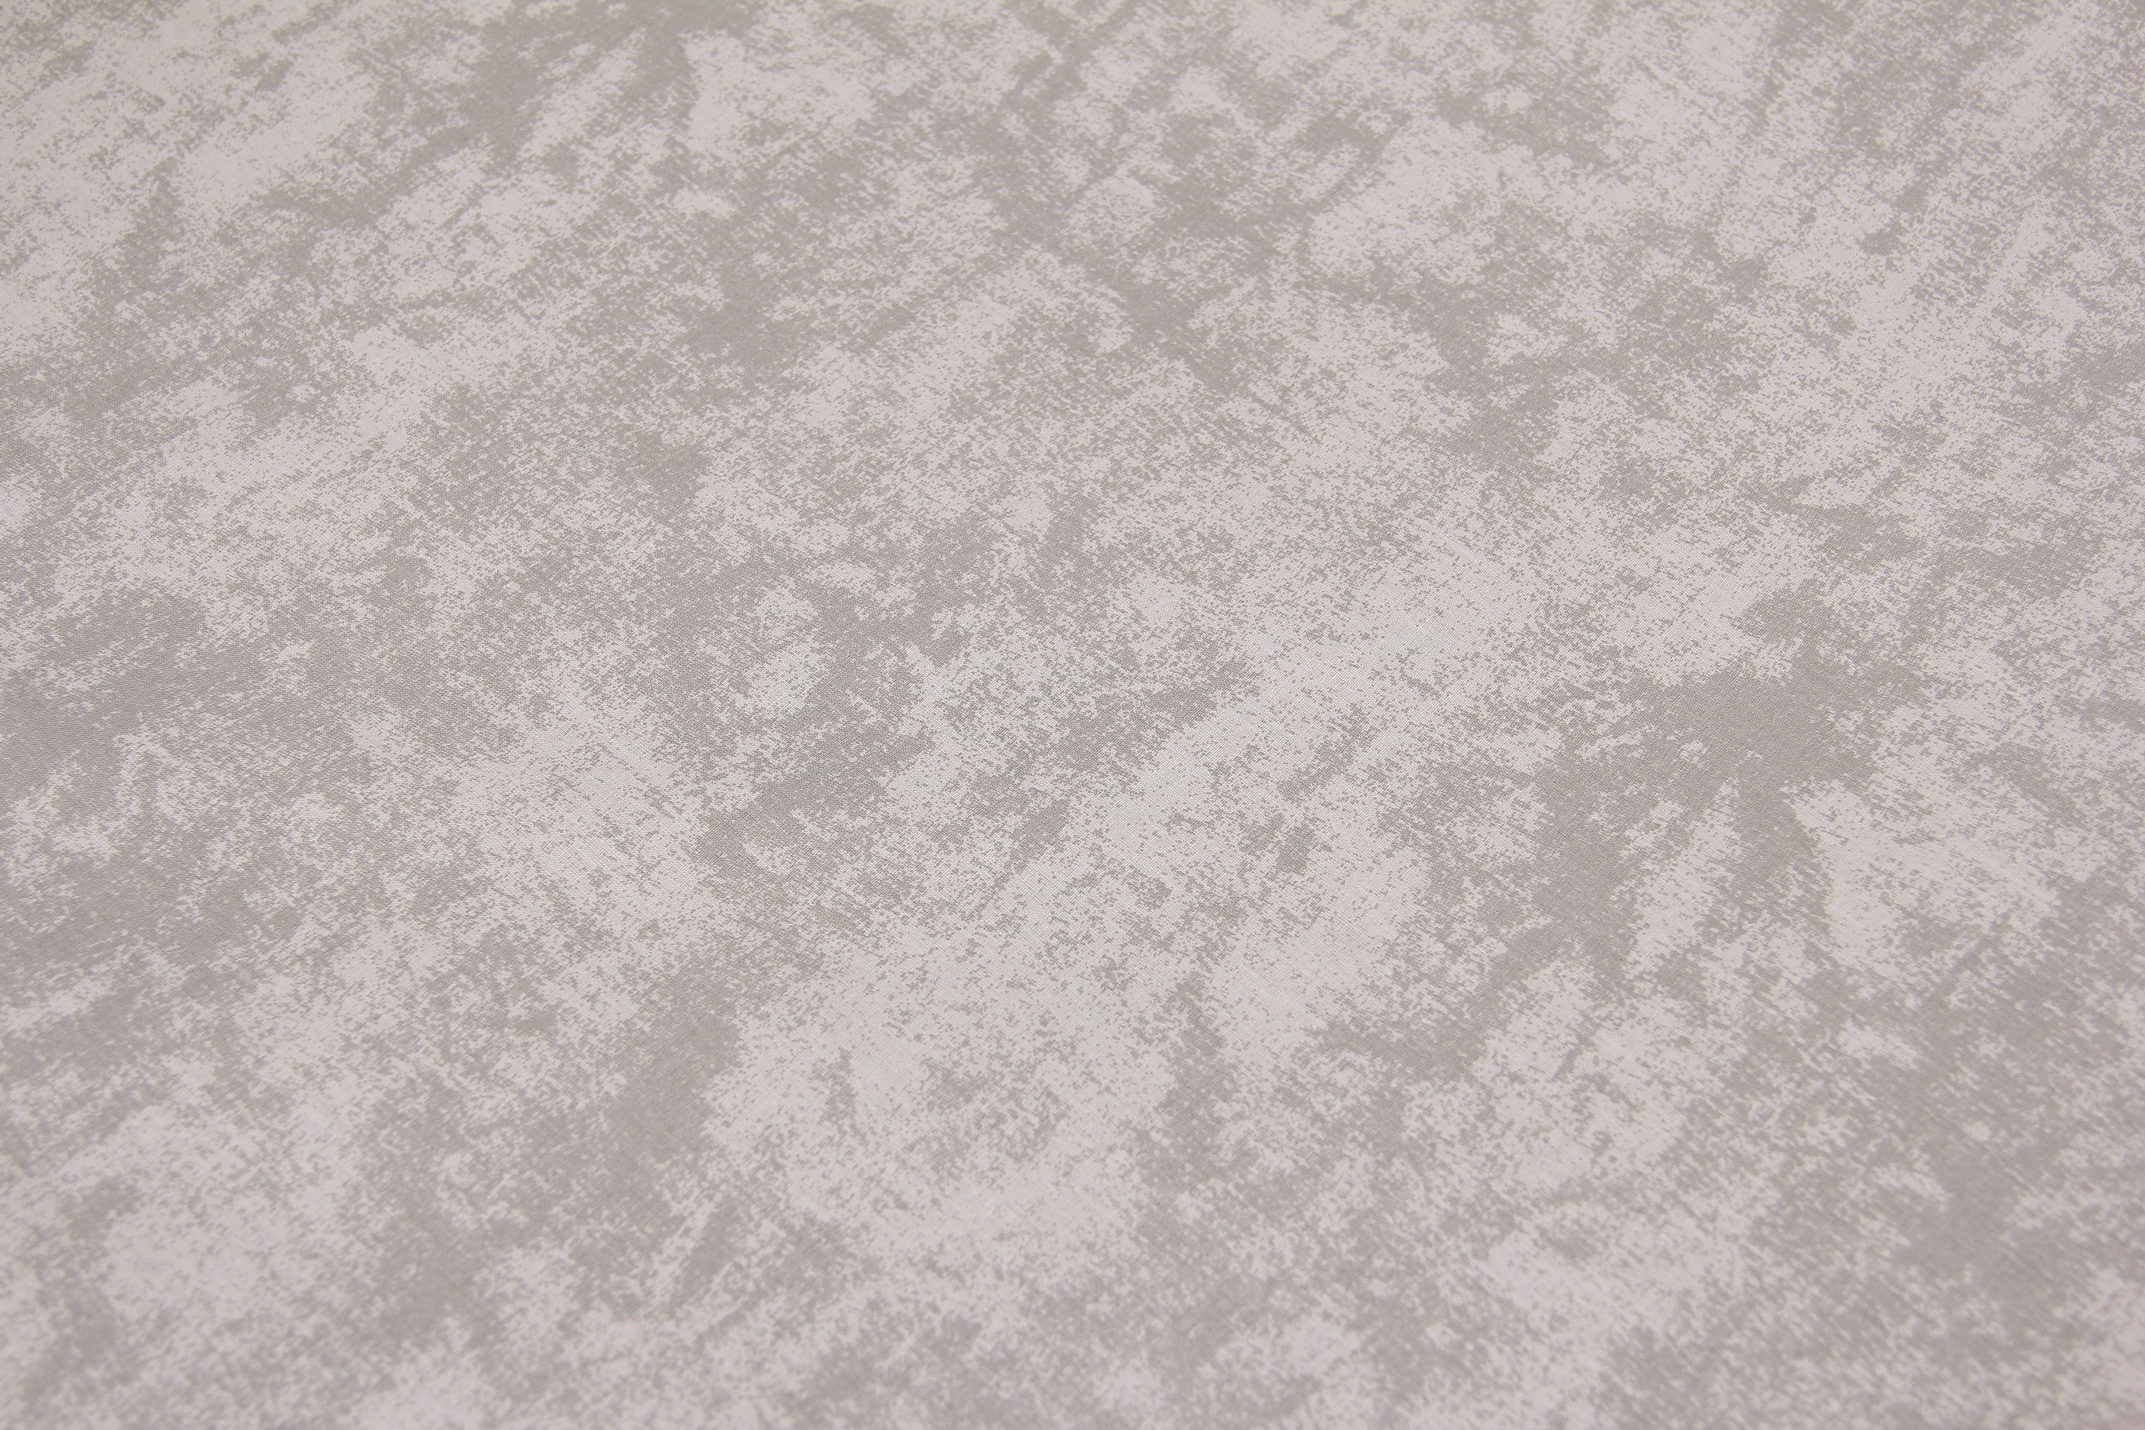 Ткань Ранфорс Травертин N78 Серо-бежевый, Турция, ширина 240 см, 100% хлопок, плотность 135 г/м2